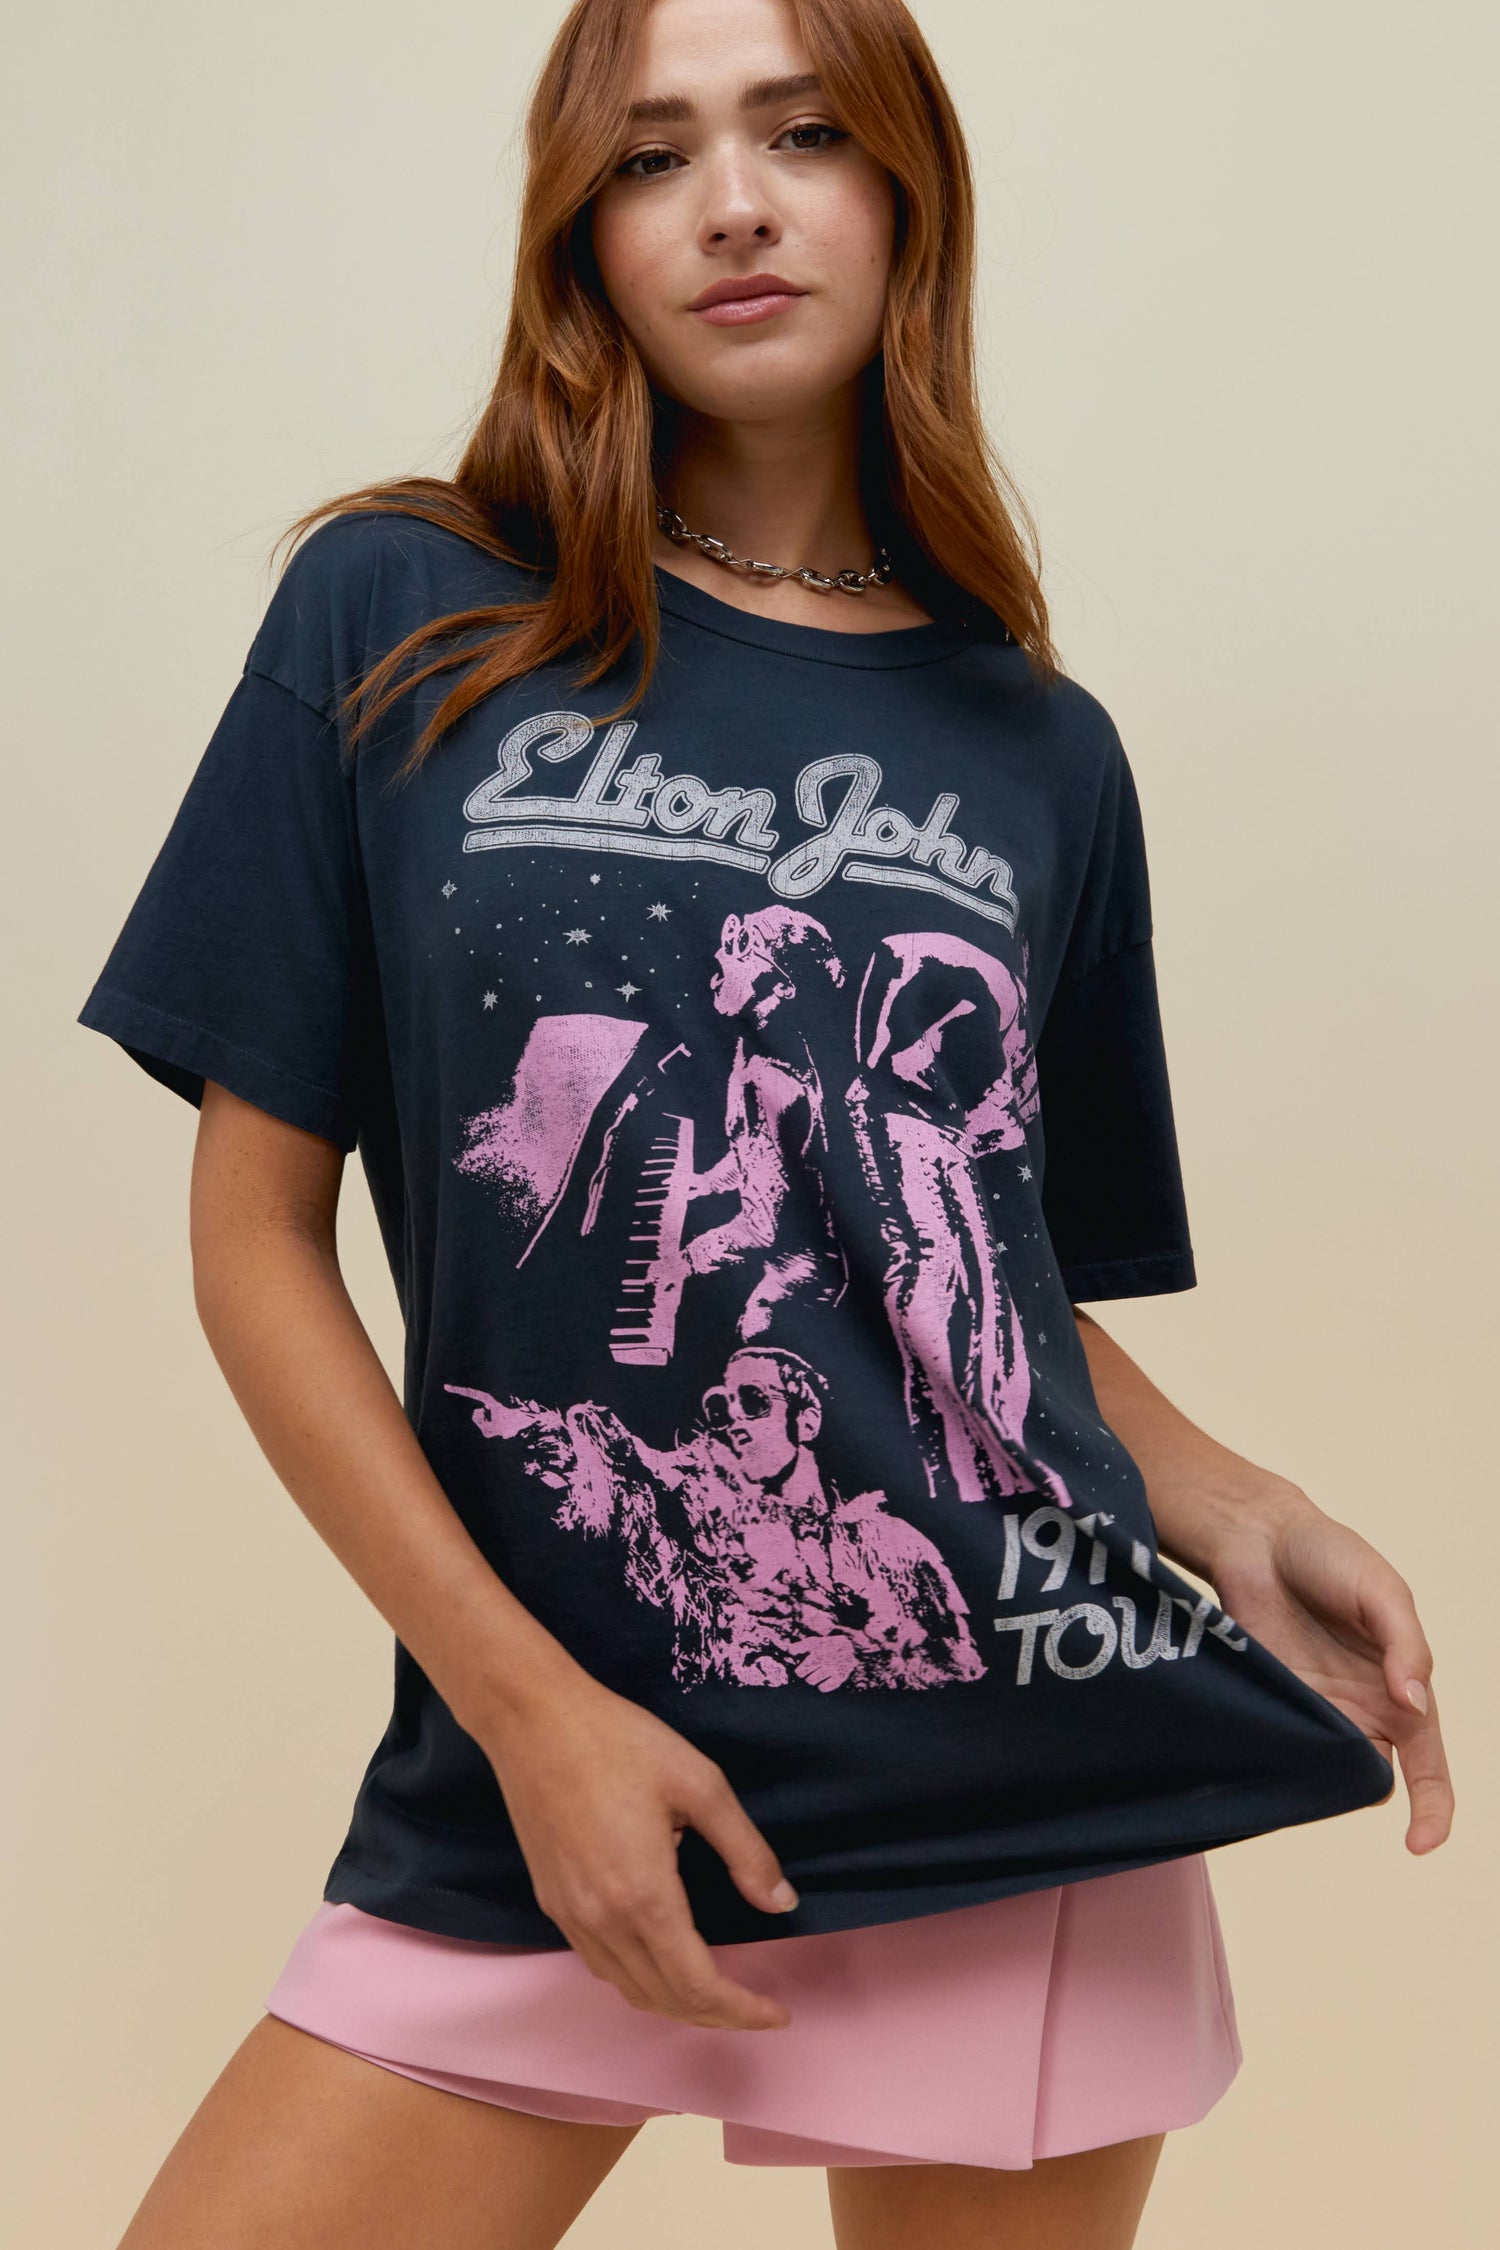 Model wearing a vintage black Elton John 1997 Tour graphic tee with contrast pink artwork.